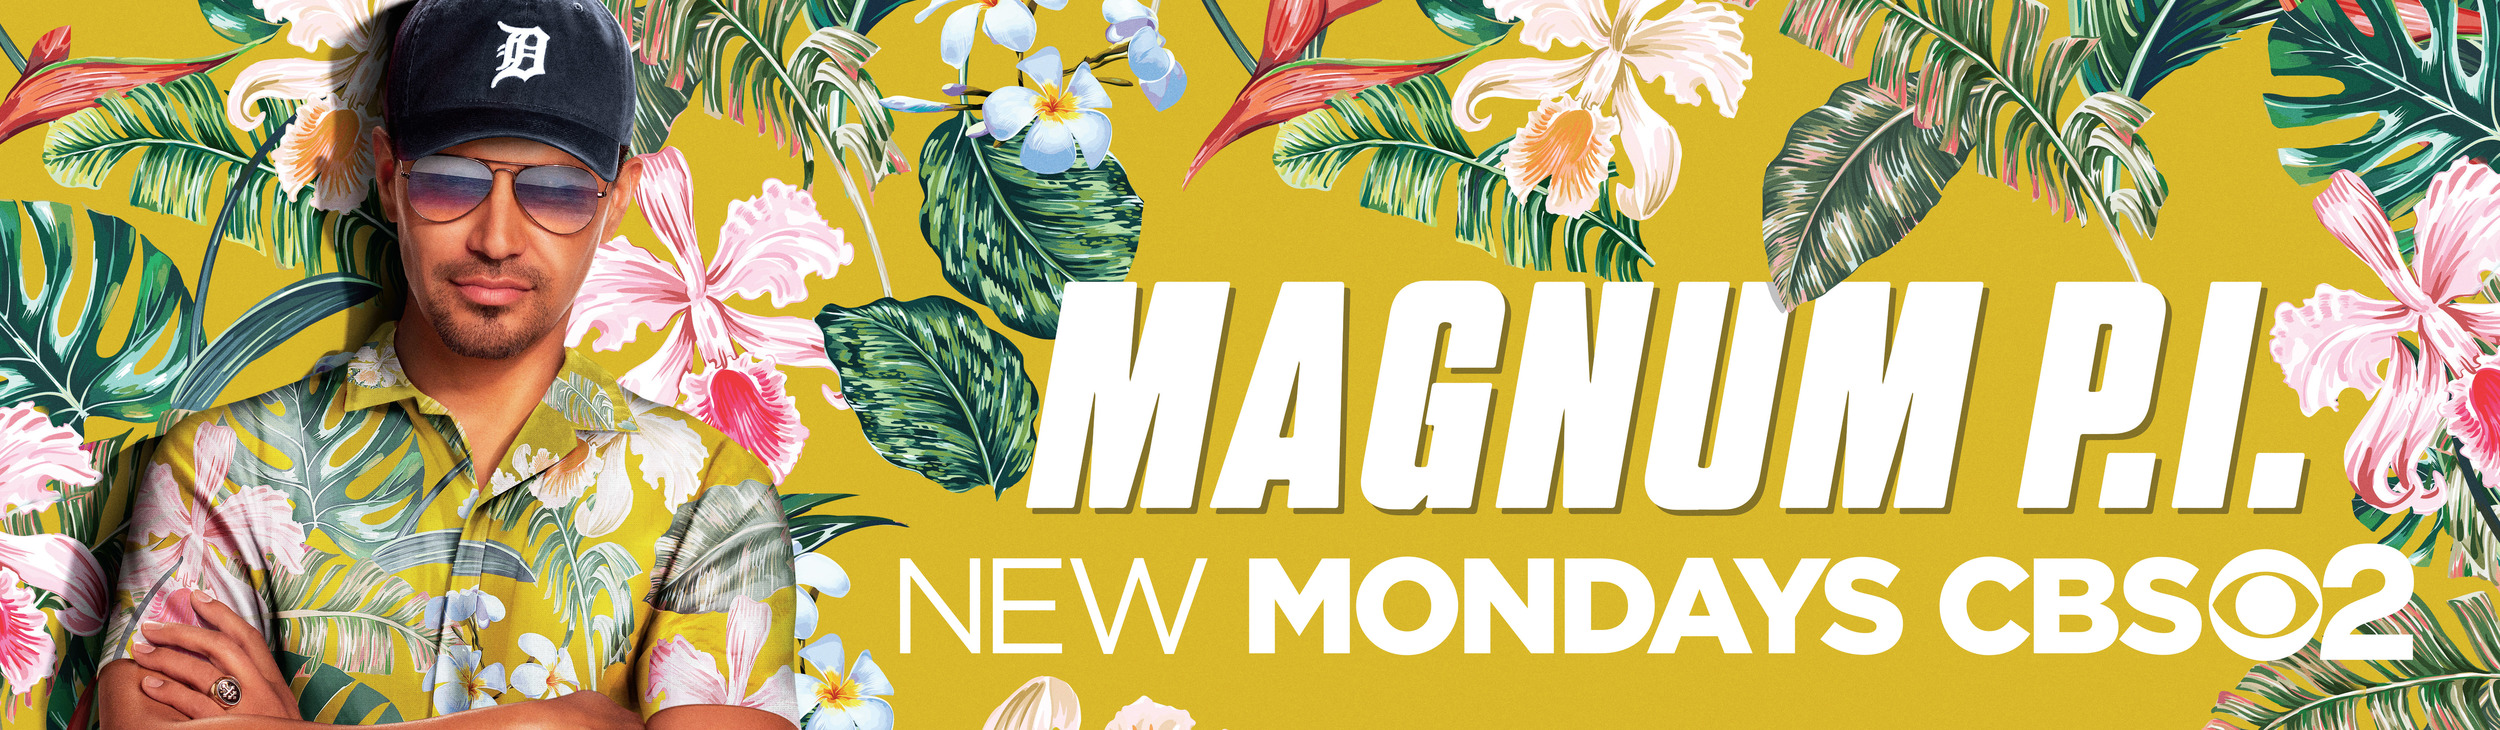 Mega Sized TV Poster Image for Magnum P.I. (#8 of 10)